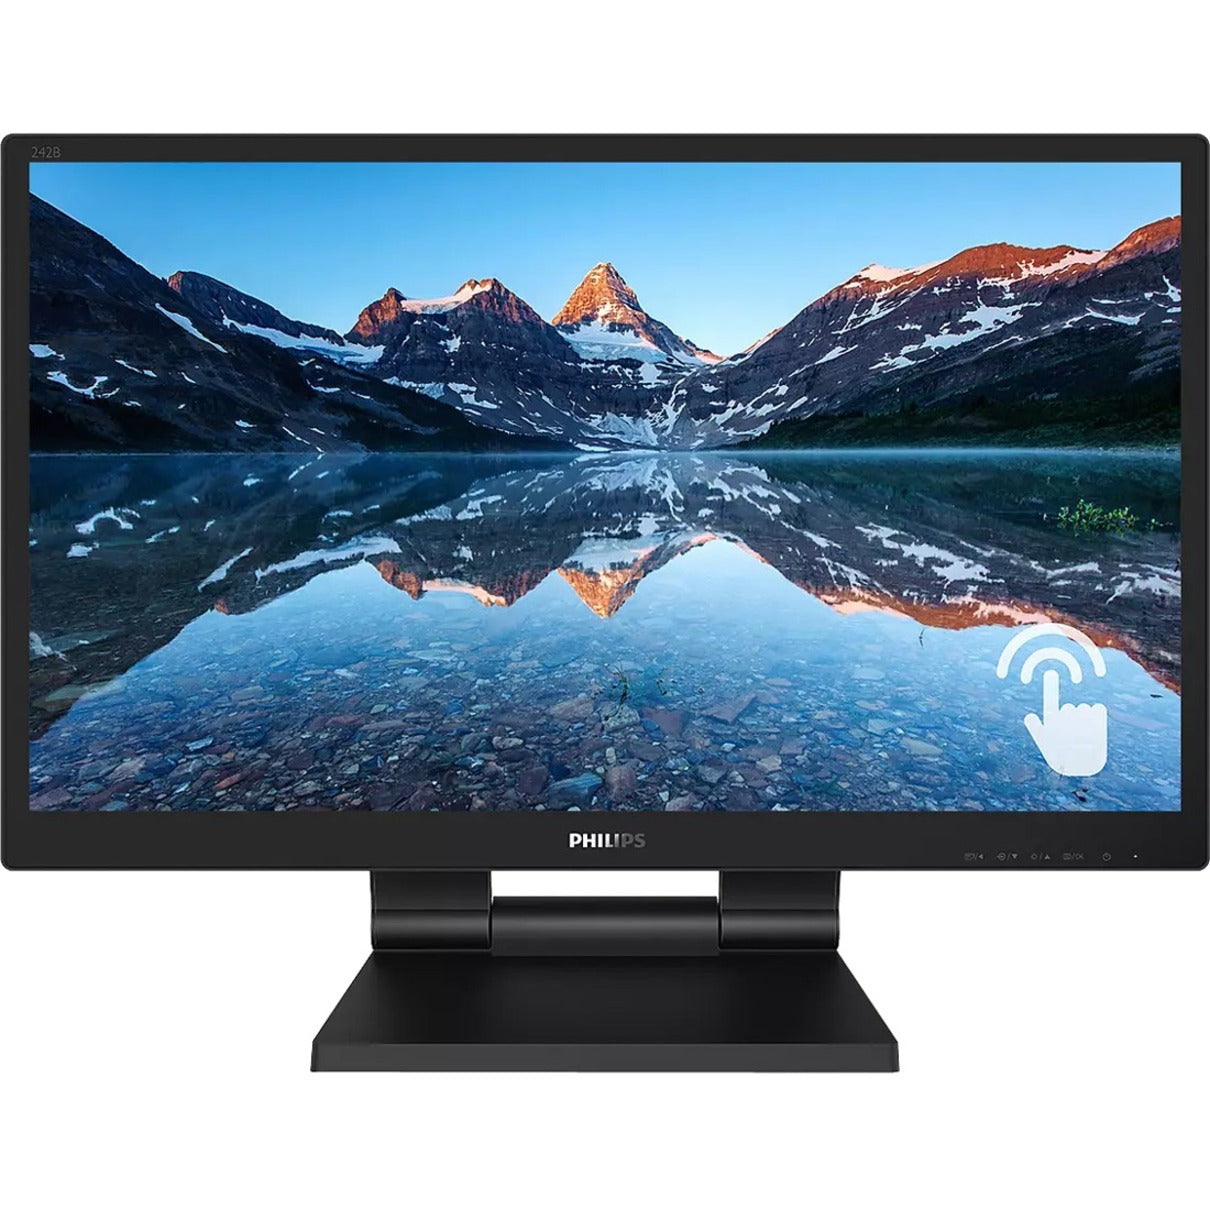 Philips 242B9T 23.8" LCD Touchscreen Monitor - Full HD, Ergonomic Design, USB Hub [Discontinued]